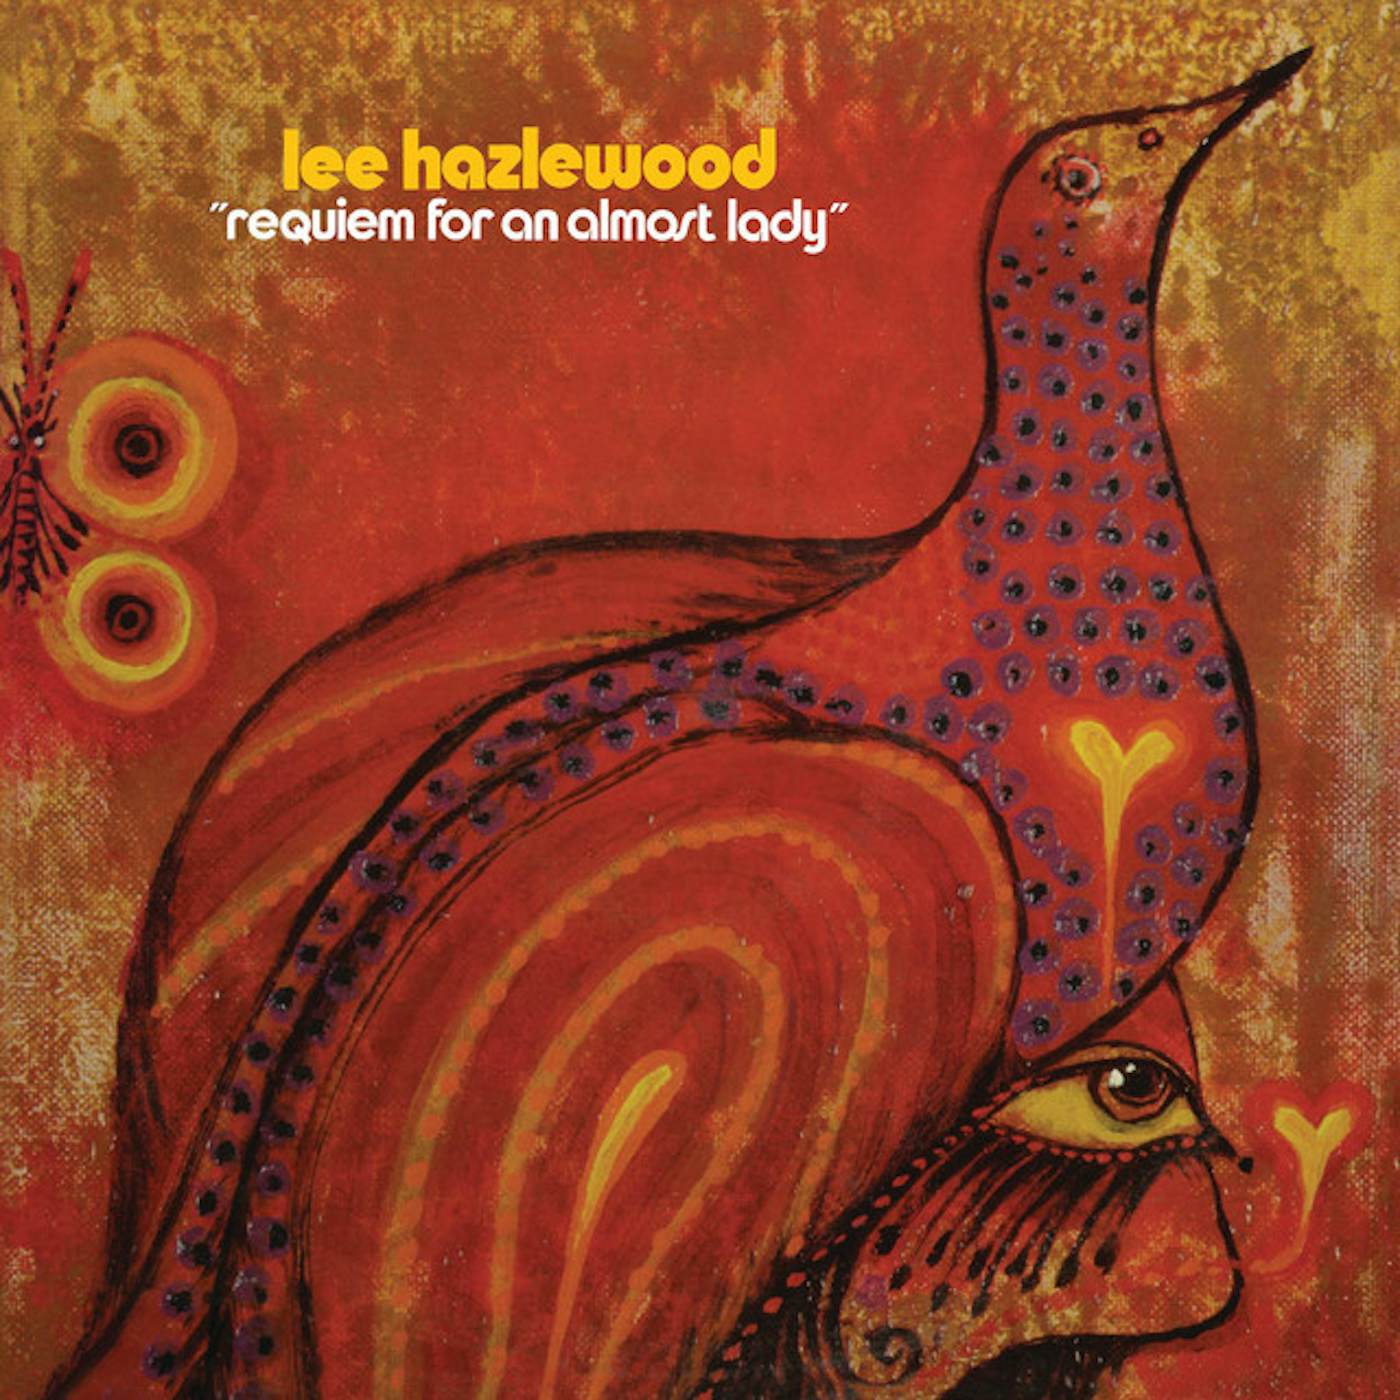 Lee Hazlewood Requiem for an Almost Lady Vinyl Record